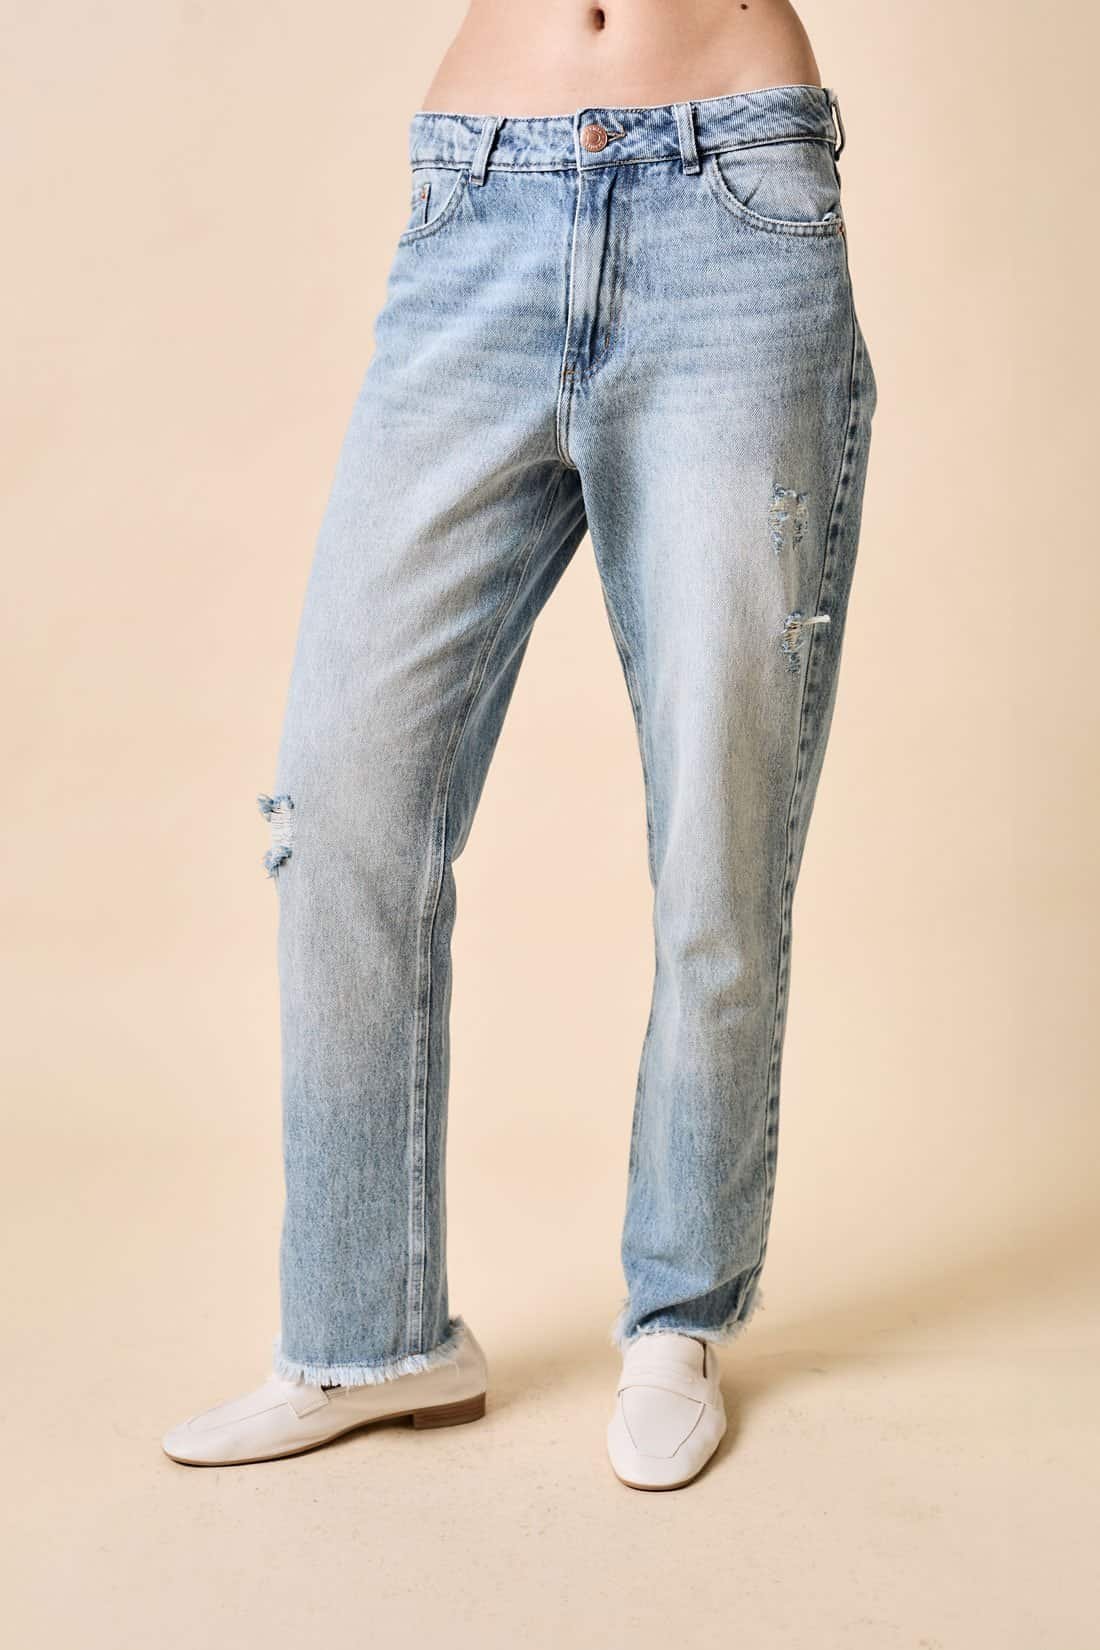 Pantalón jean de mujer ropa de moda verano 25